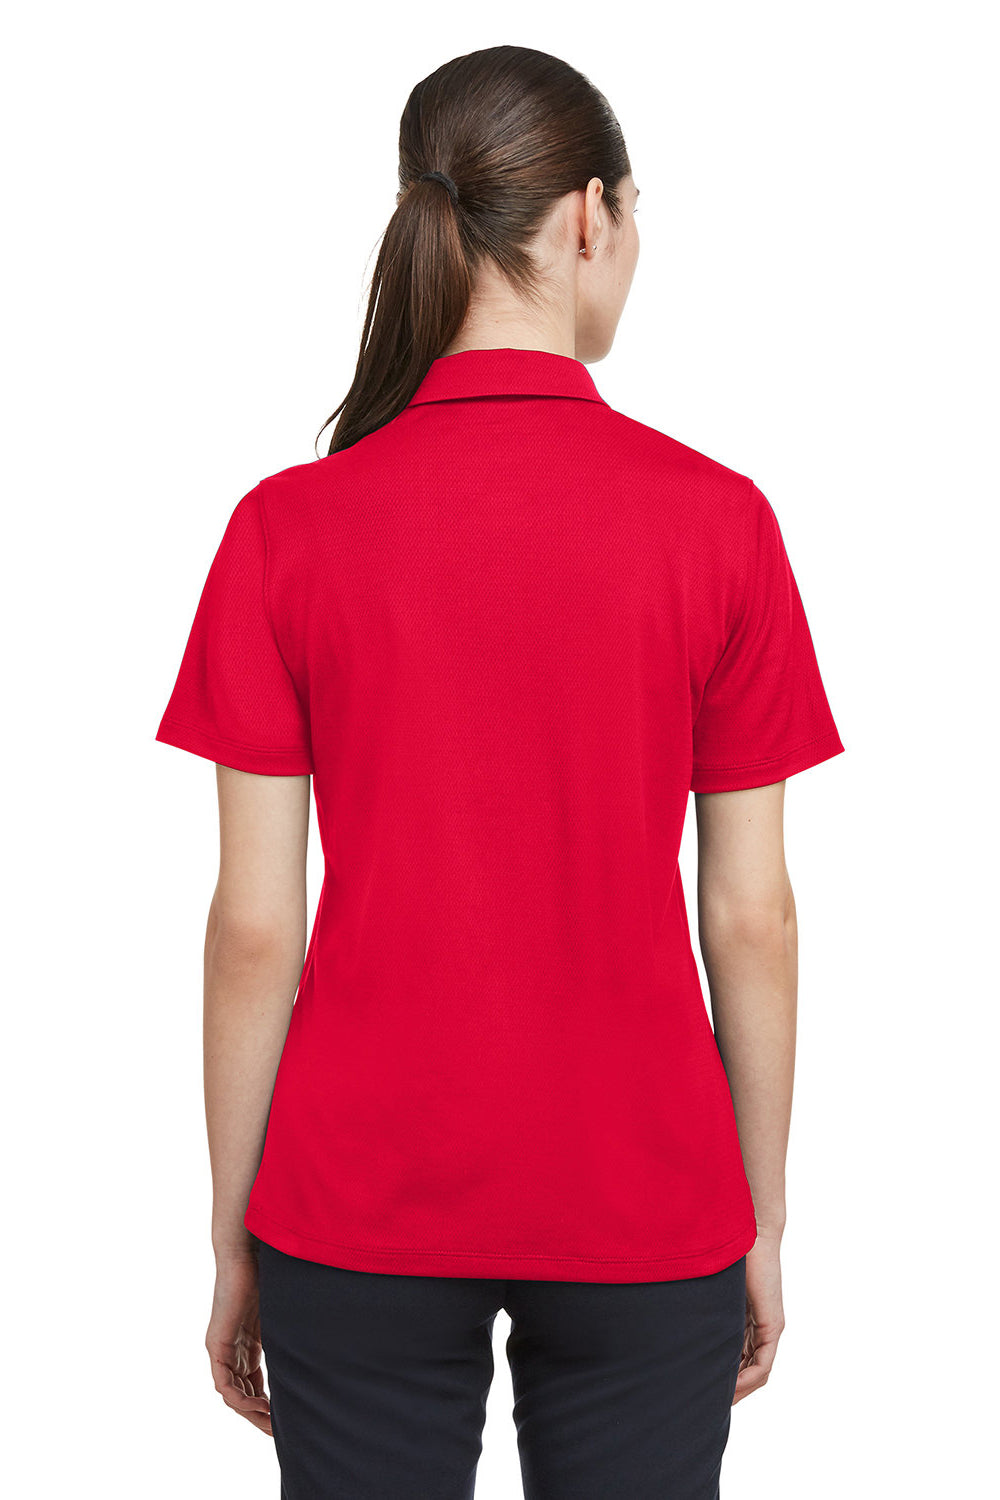 Under Armour 1370431 Womens Tech Moisture Wicking Short Sleeve Polo Shirt Red Model Back